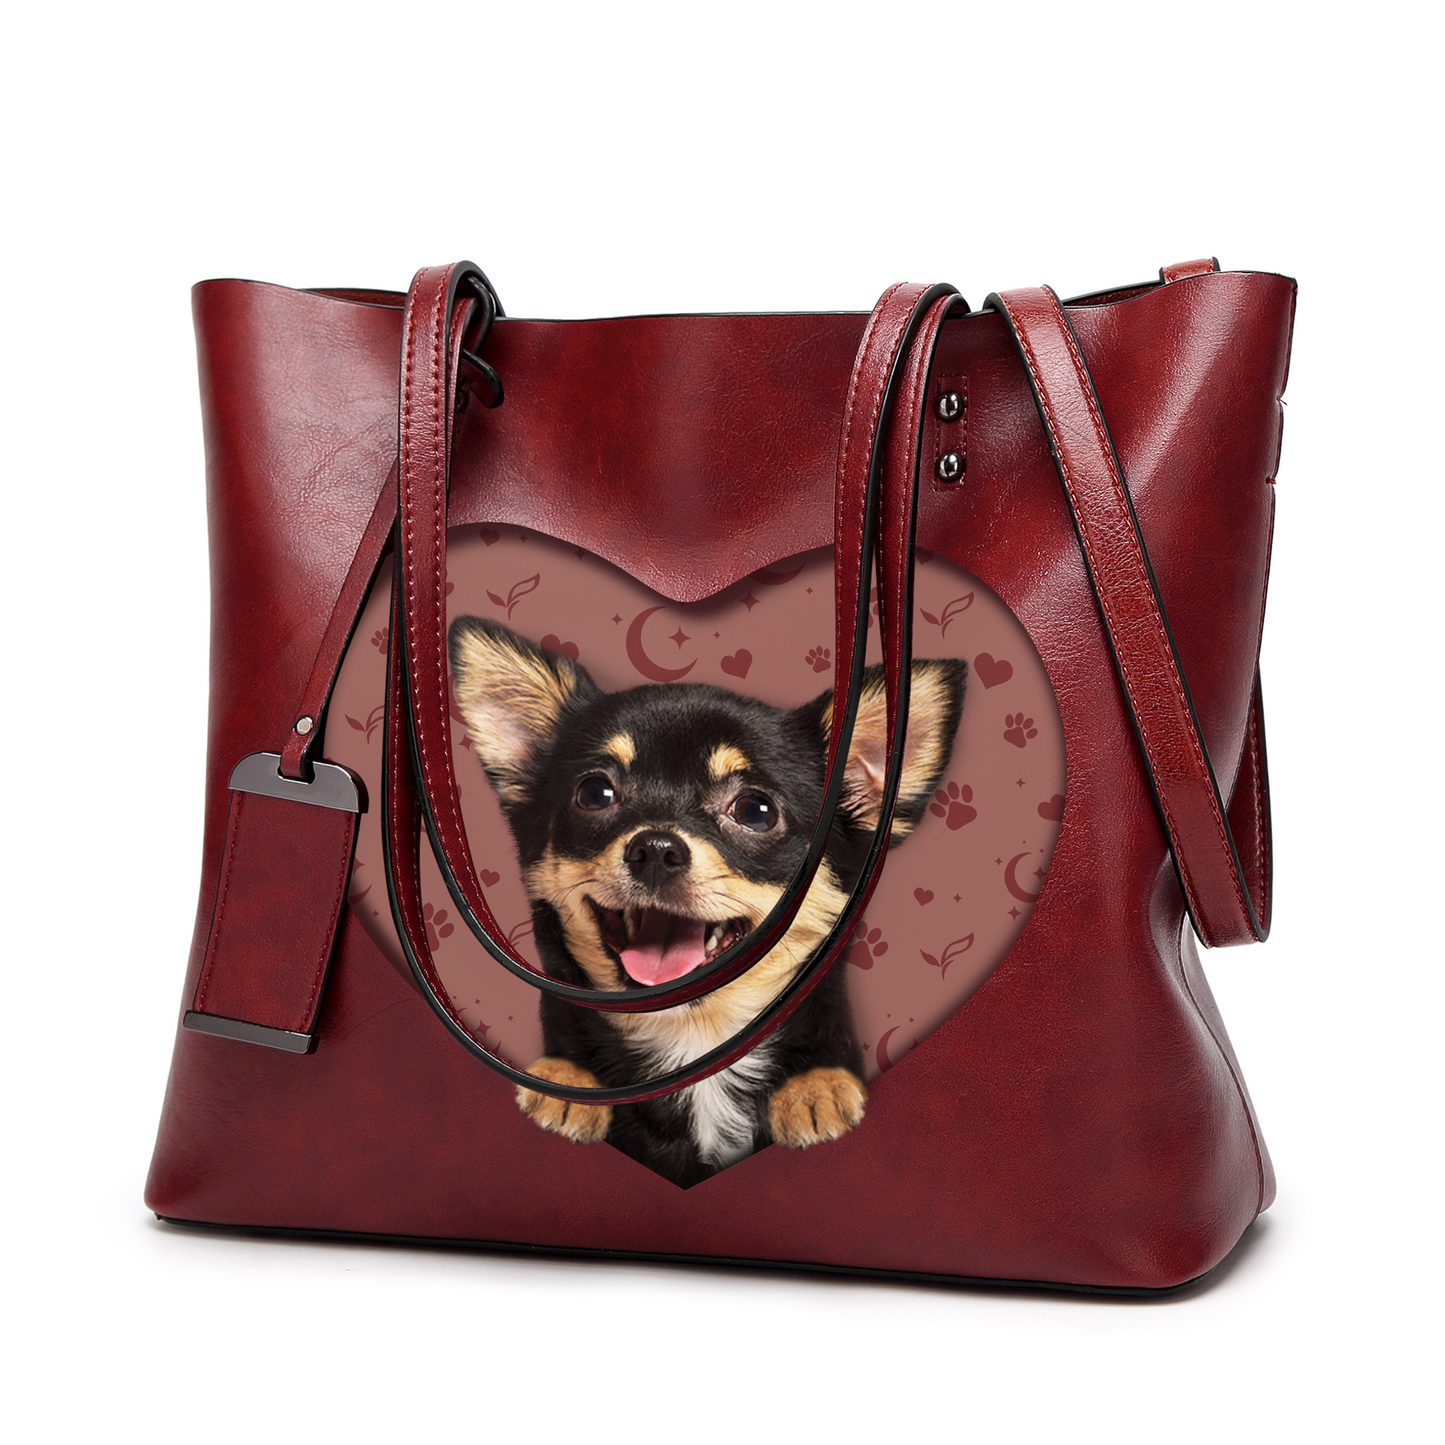 I Know I'm Cute - Chihuahua Glamour Handbag V3 - 8